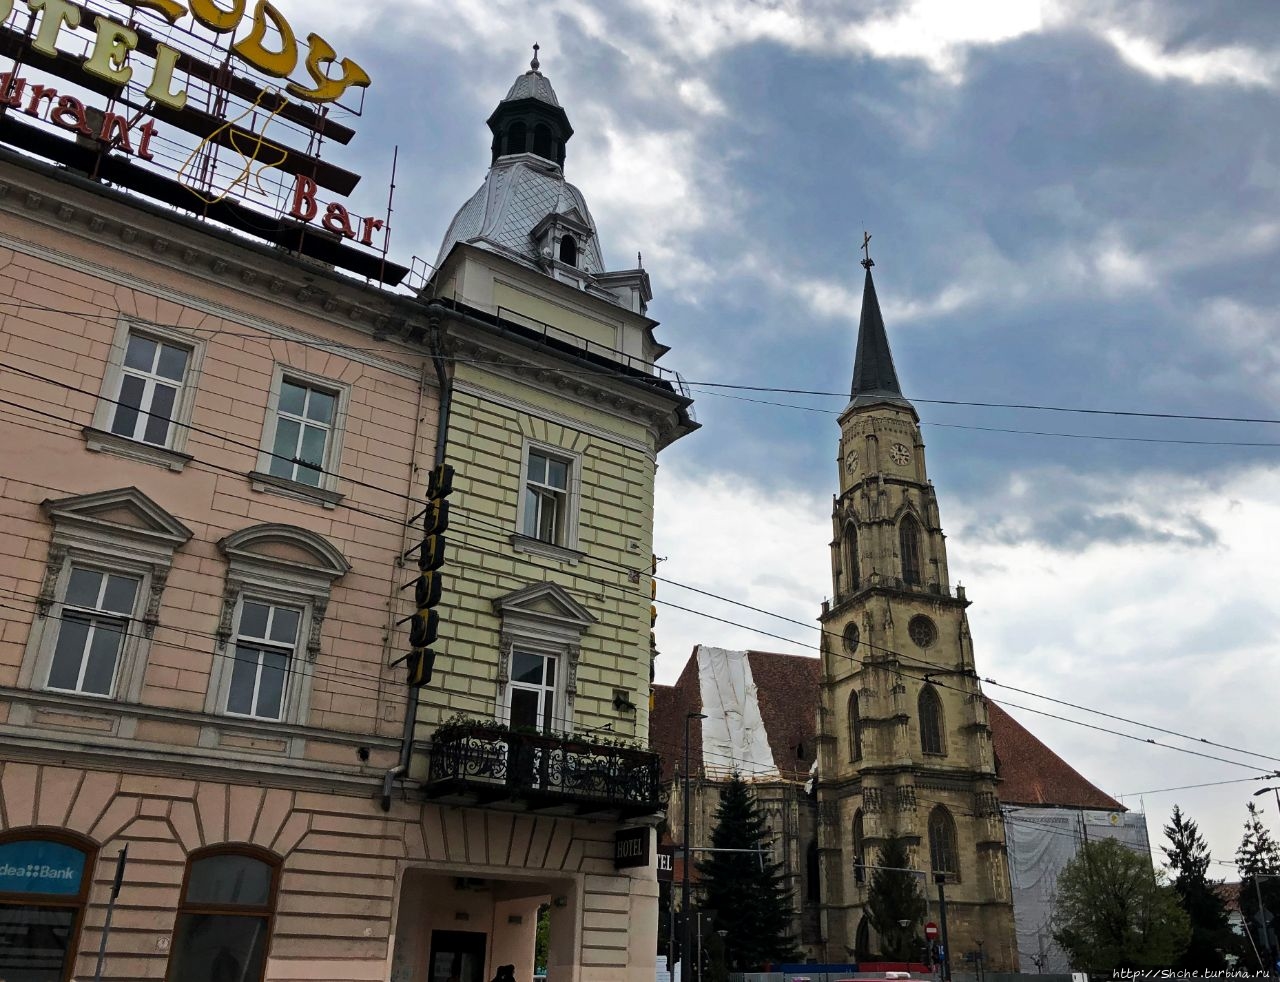 Старый город (Центр) Клуж-Напока, Румыния